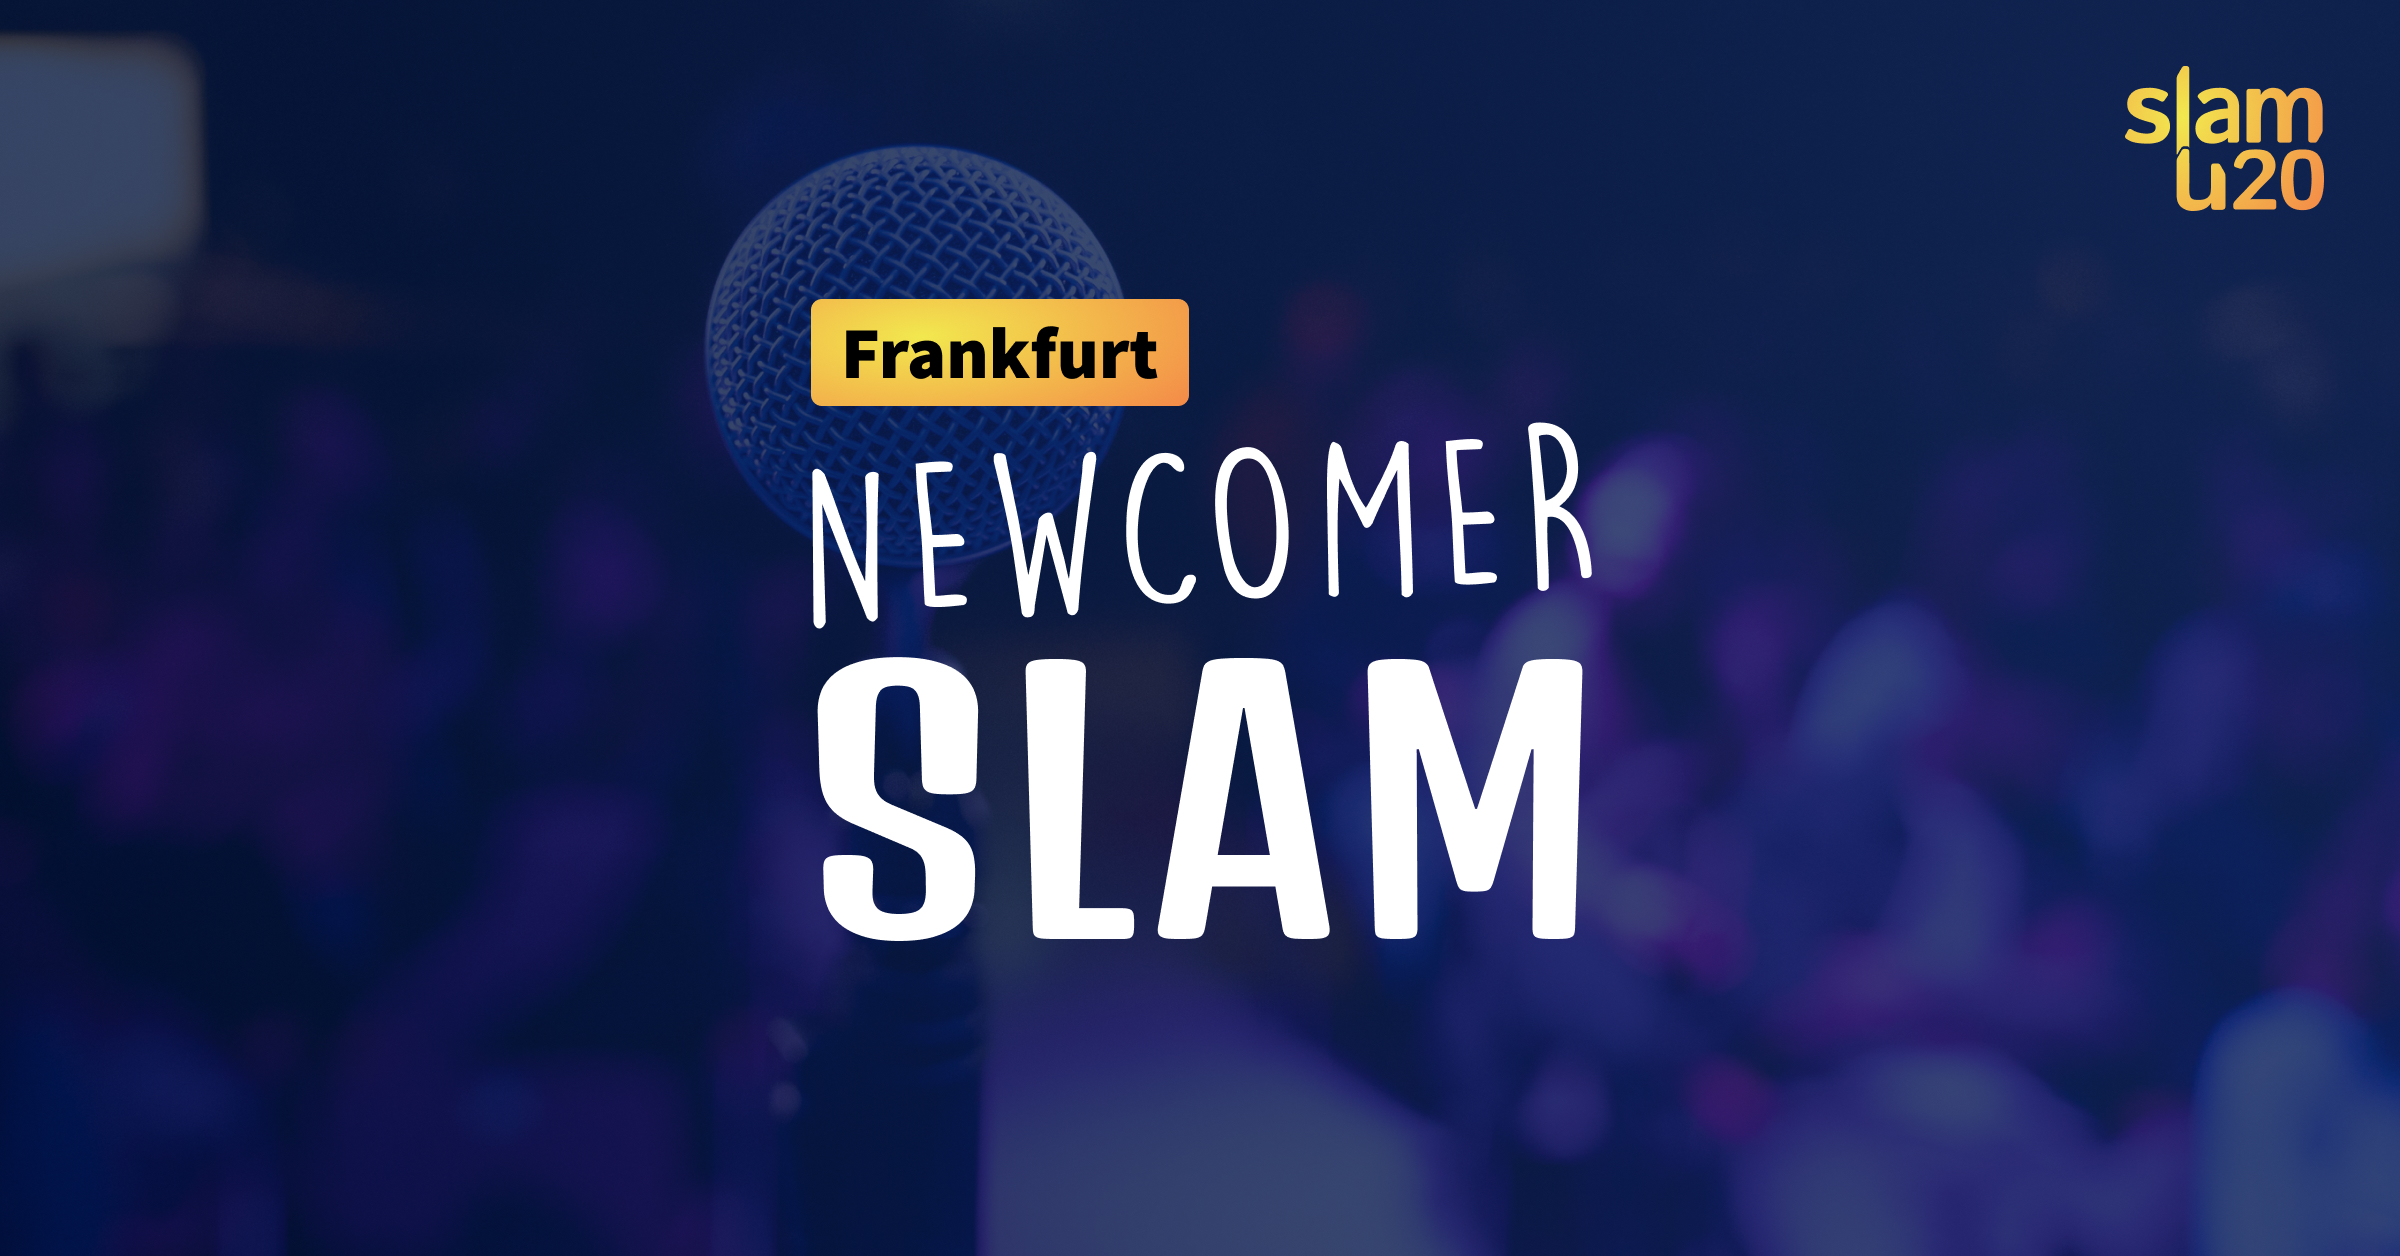 Der Newcomer Slam in Frankfurt am Main.